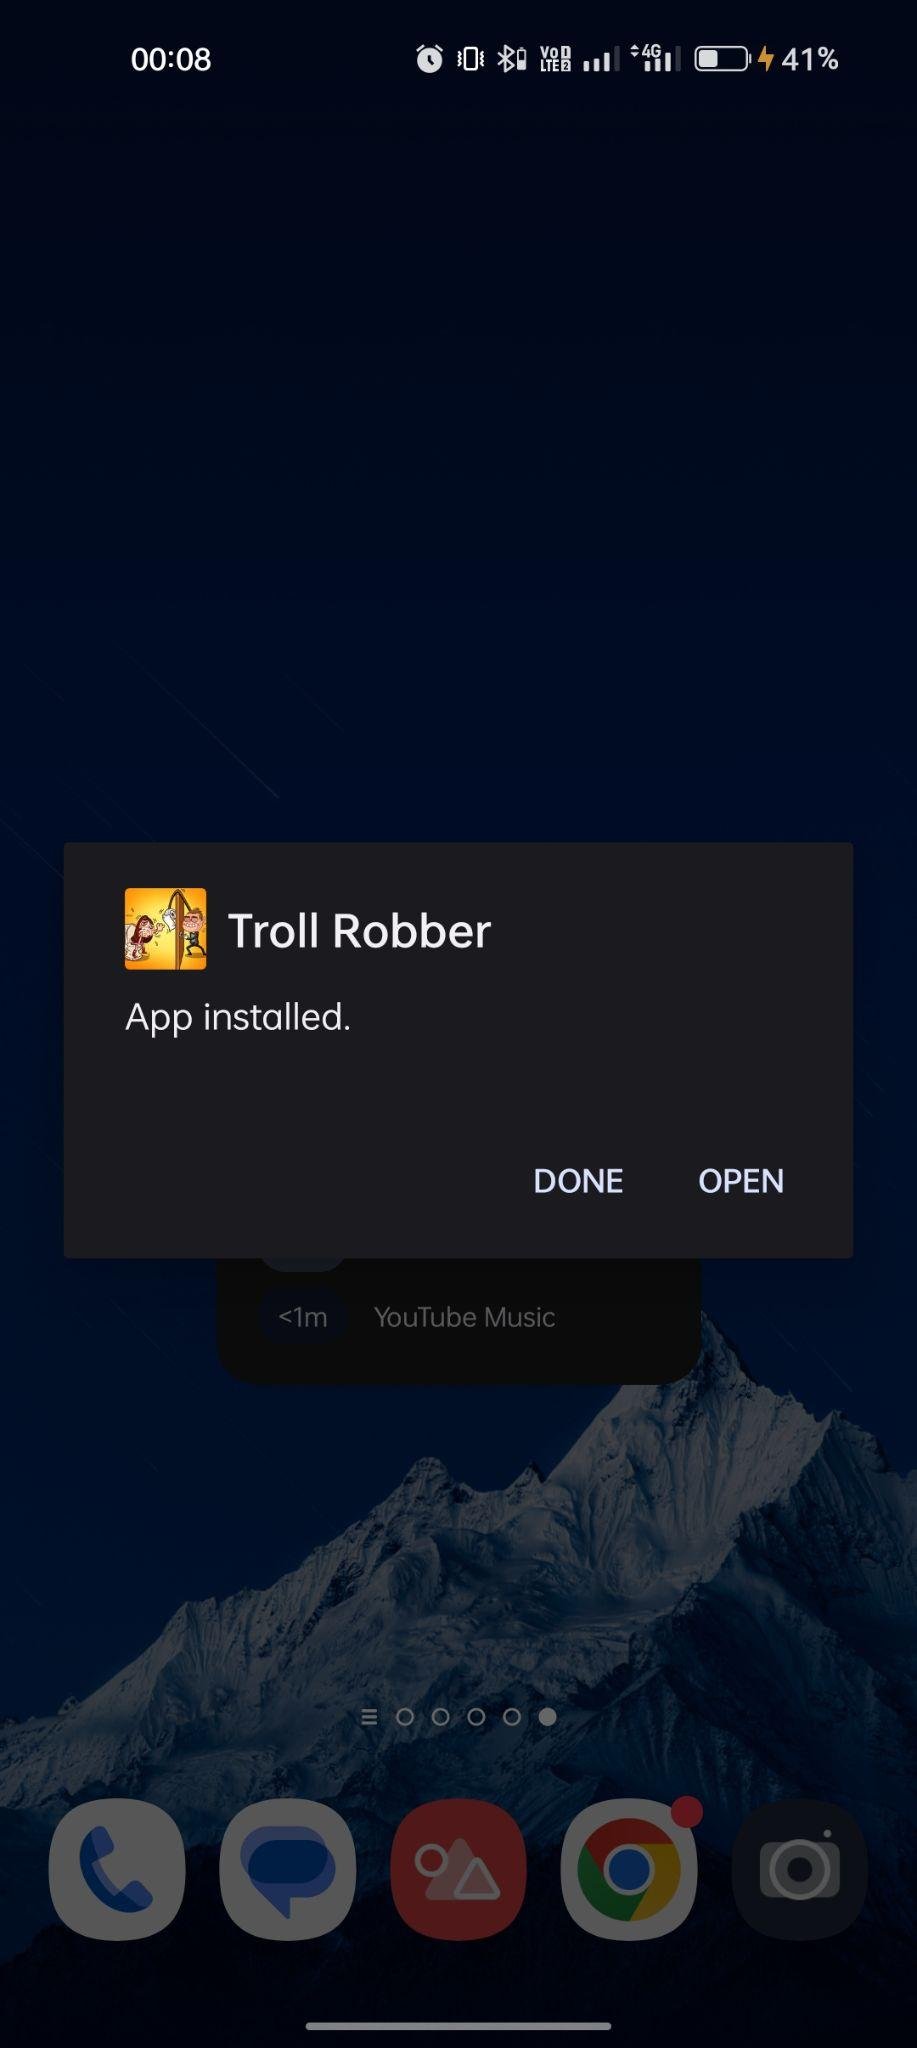 Troll Robber apk installed 